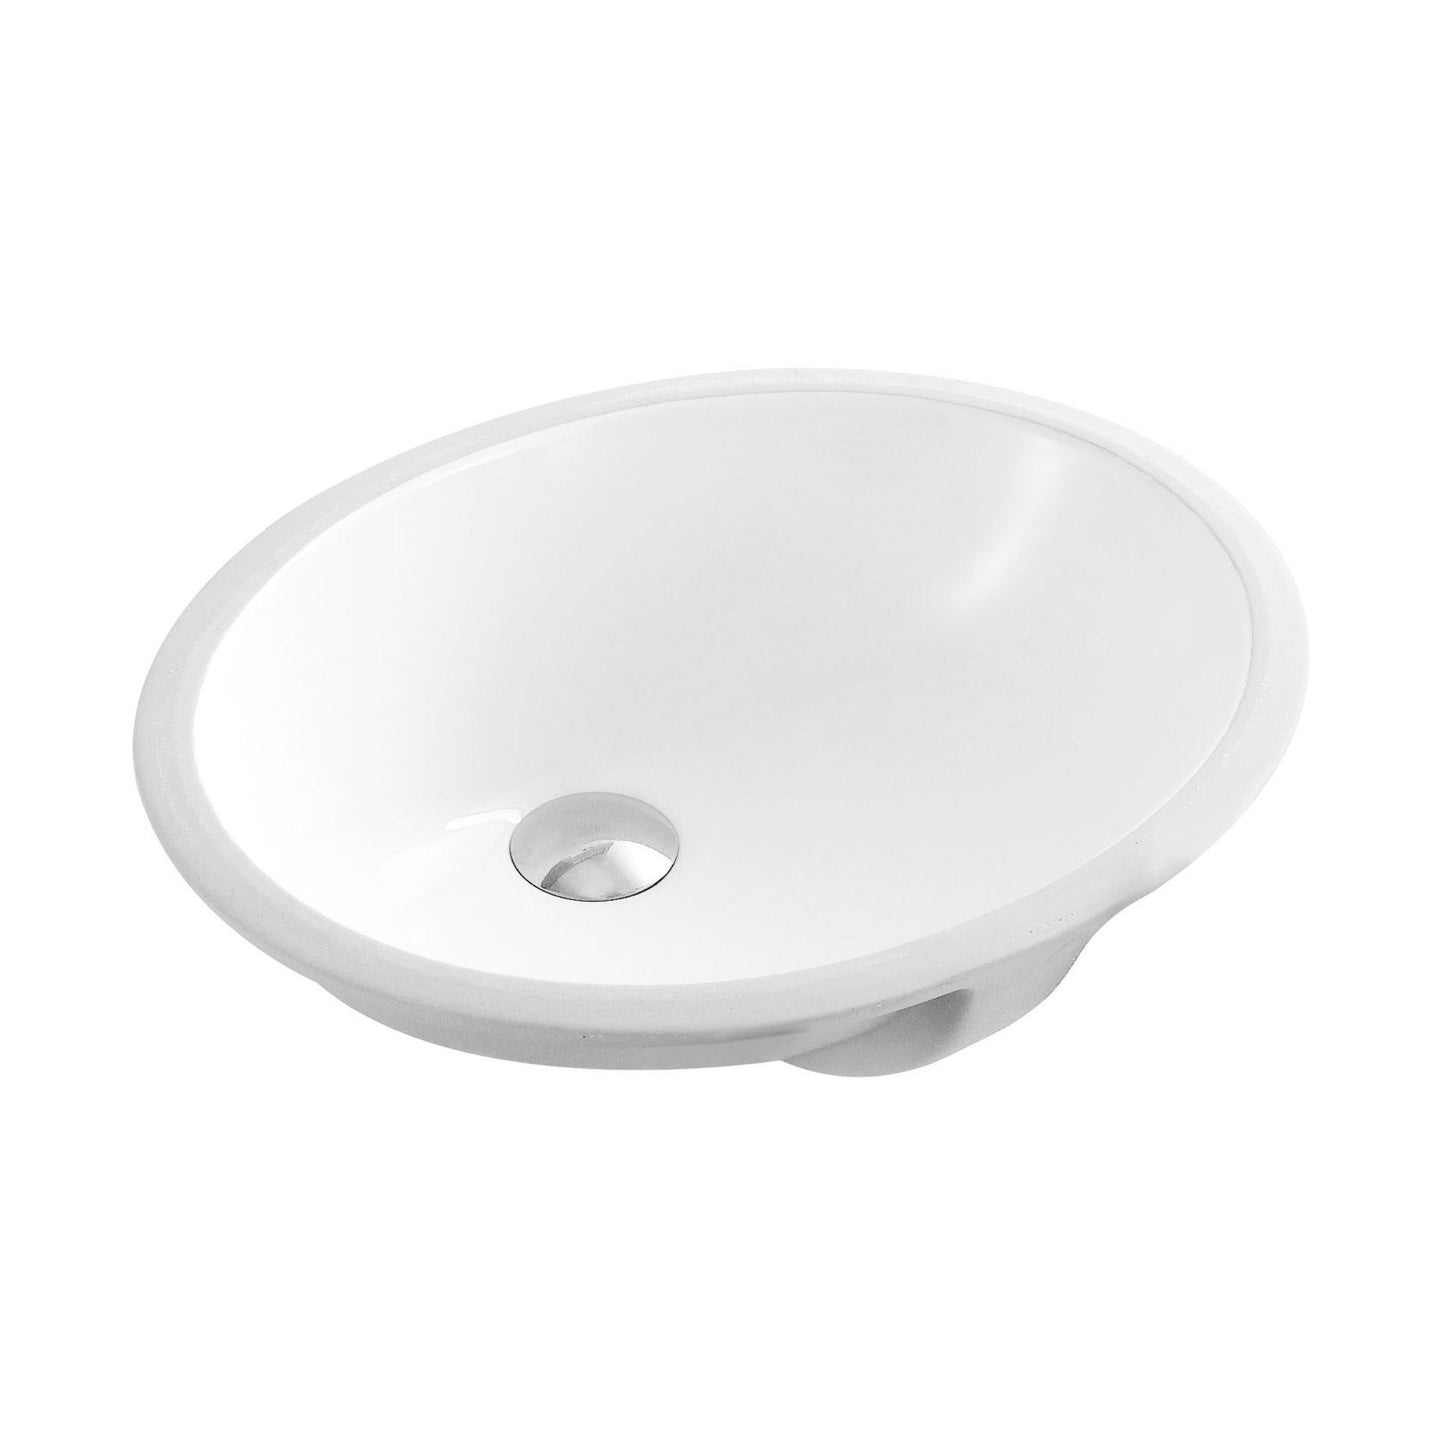 Ratel 18" x 15" White Oval Undermount Bathroom Sink